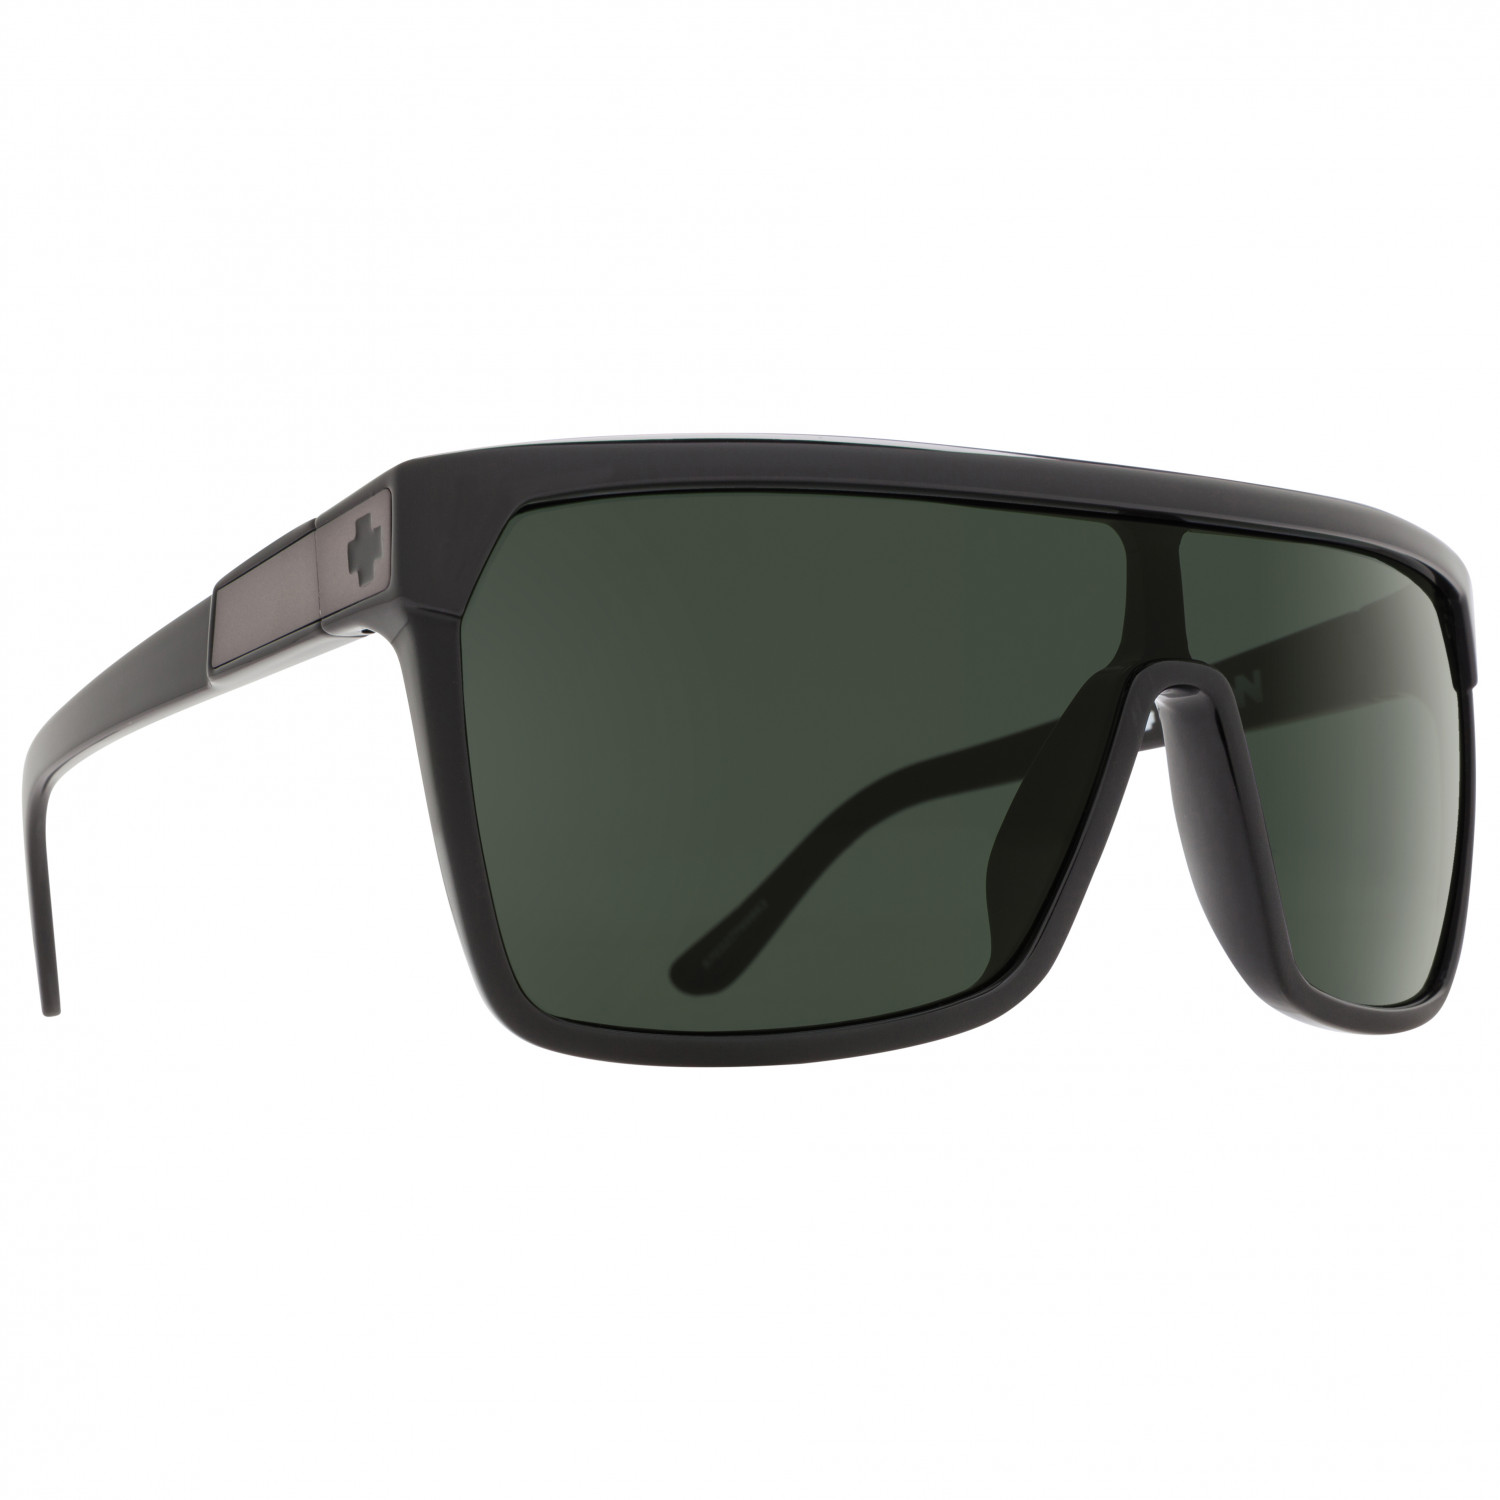 солнцезащитные очки spy flynn s3 vlt 15% цвет soft matte black red fade Солнцезащитные очки Spy+ Flynn S3 (VLT 15%), цвет Black/Matte Black